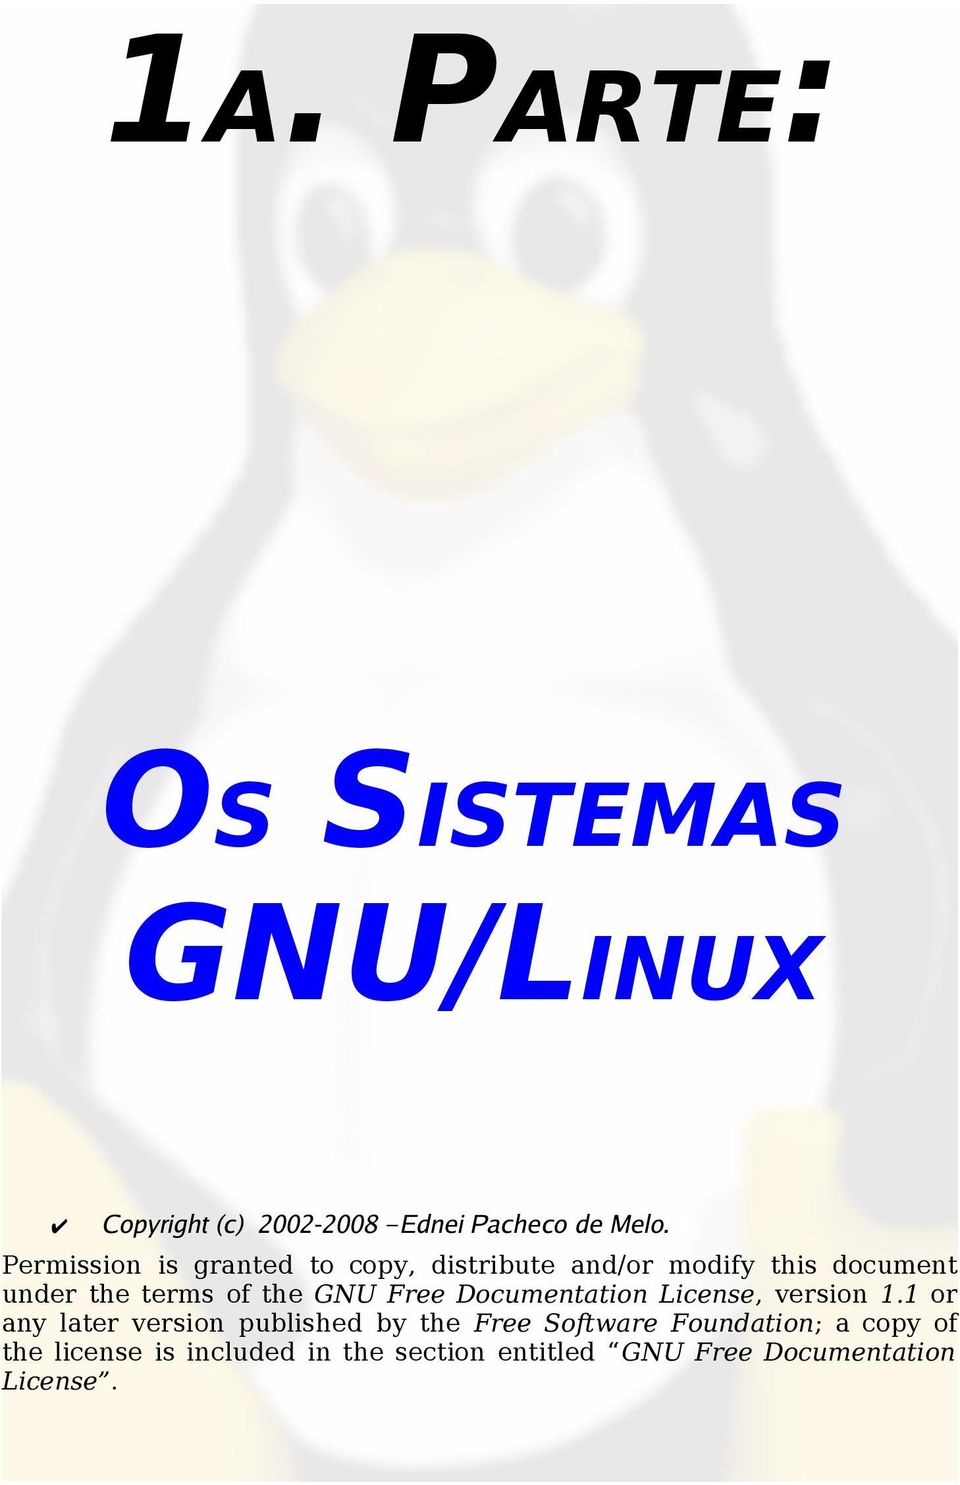 GNU Free Documentation License, version 1.